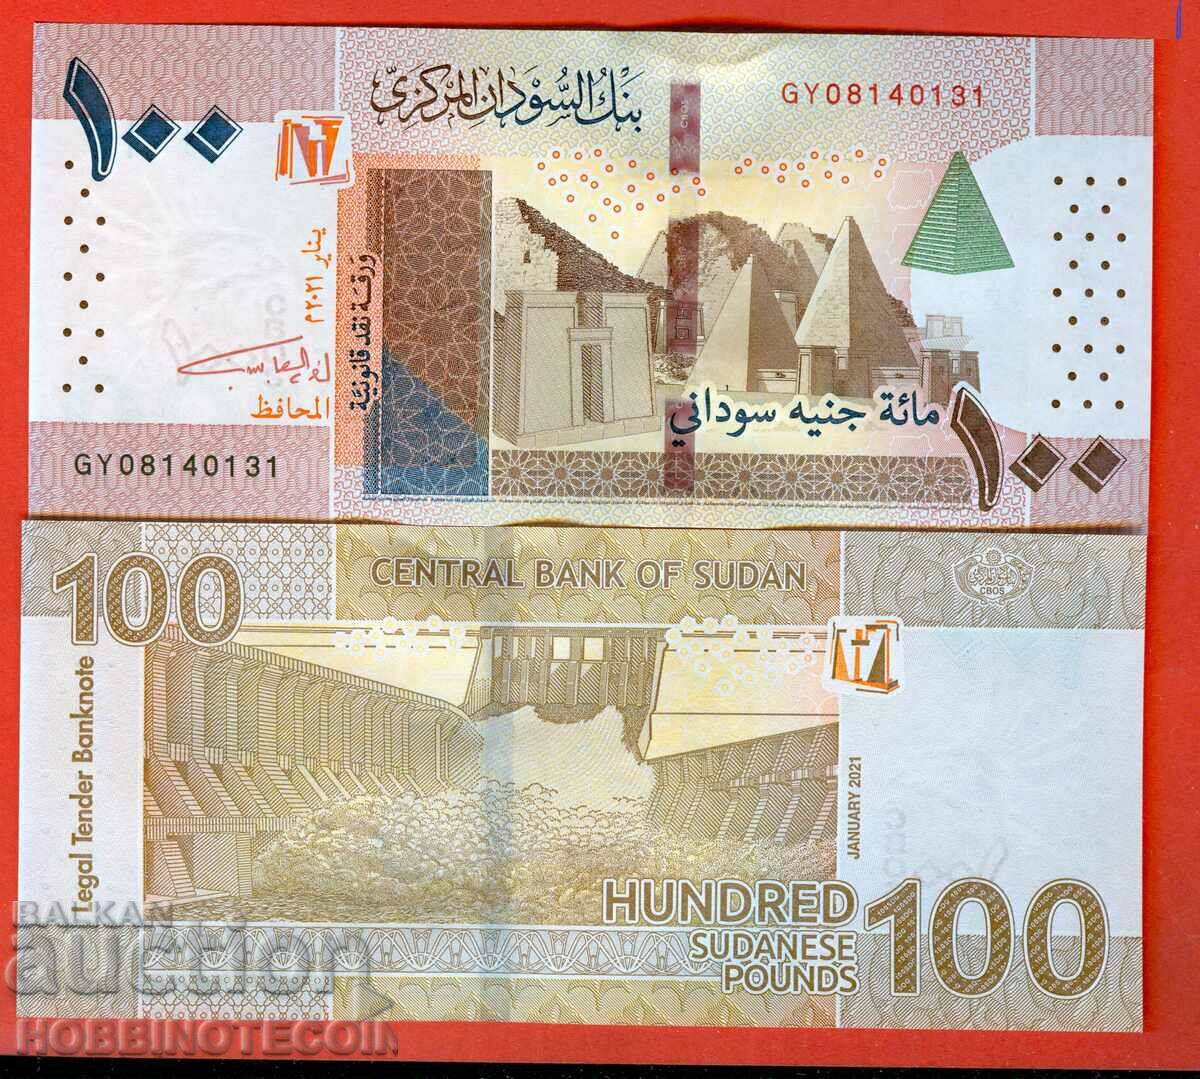 SUDAN SUDAN Emisiune de 100 de lire sterline - emisiune 2021 NOU UNC